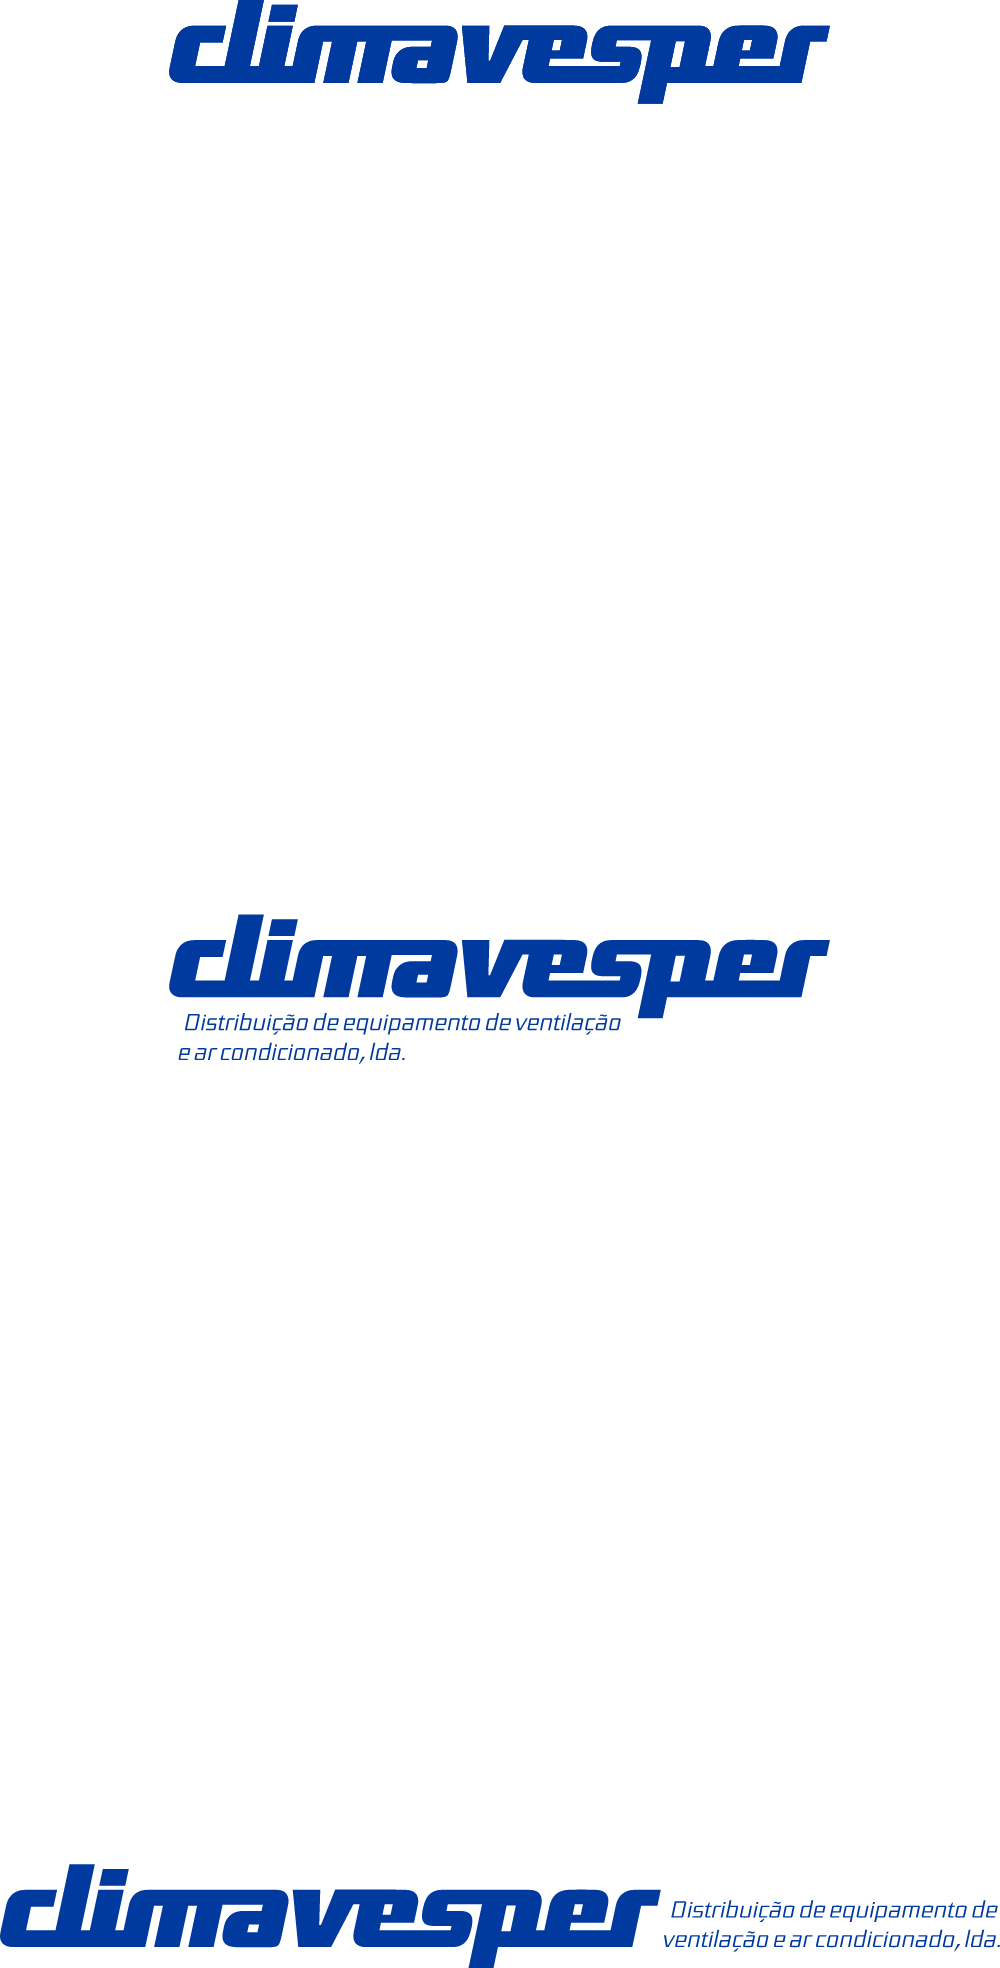 Climavesper Logo Logos